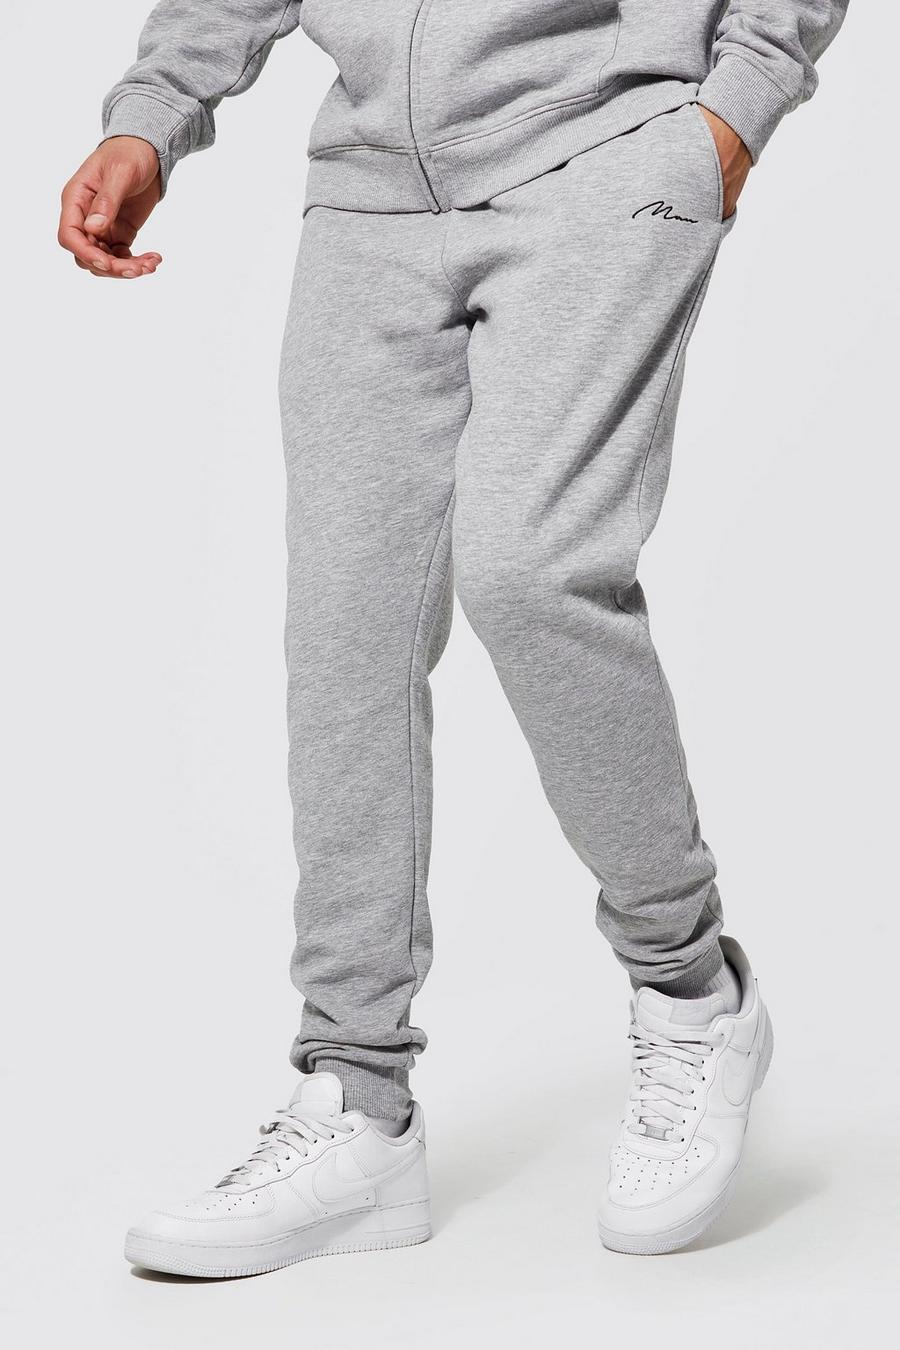 Pantalón deportivo Tall pitillo de tela jersey con algodón ecológico, Grey marl grigio